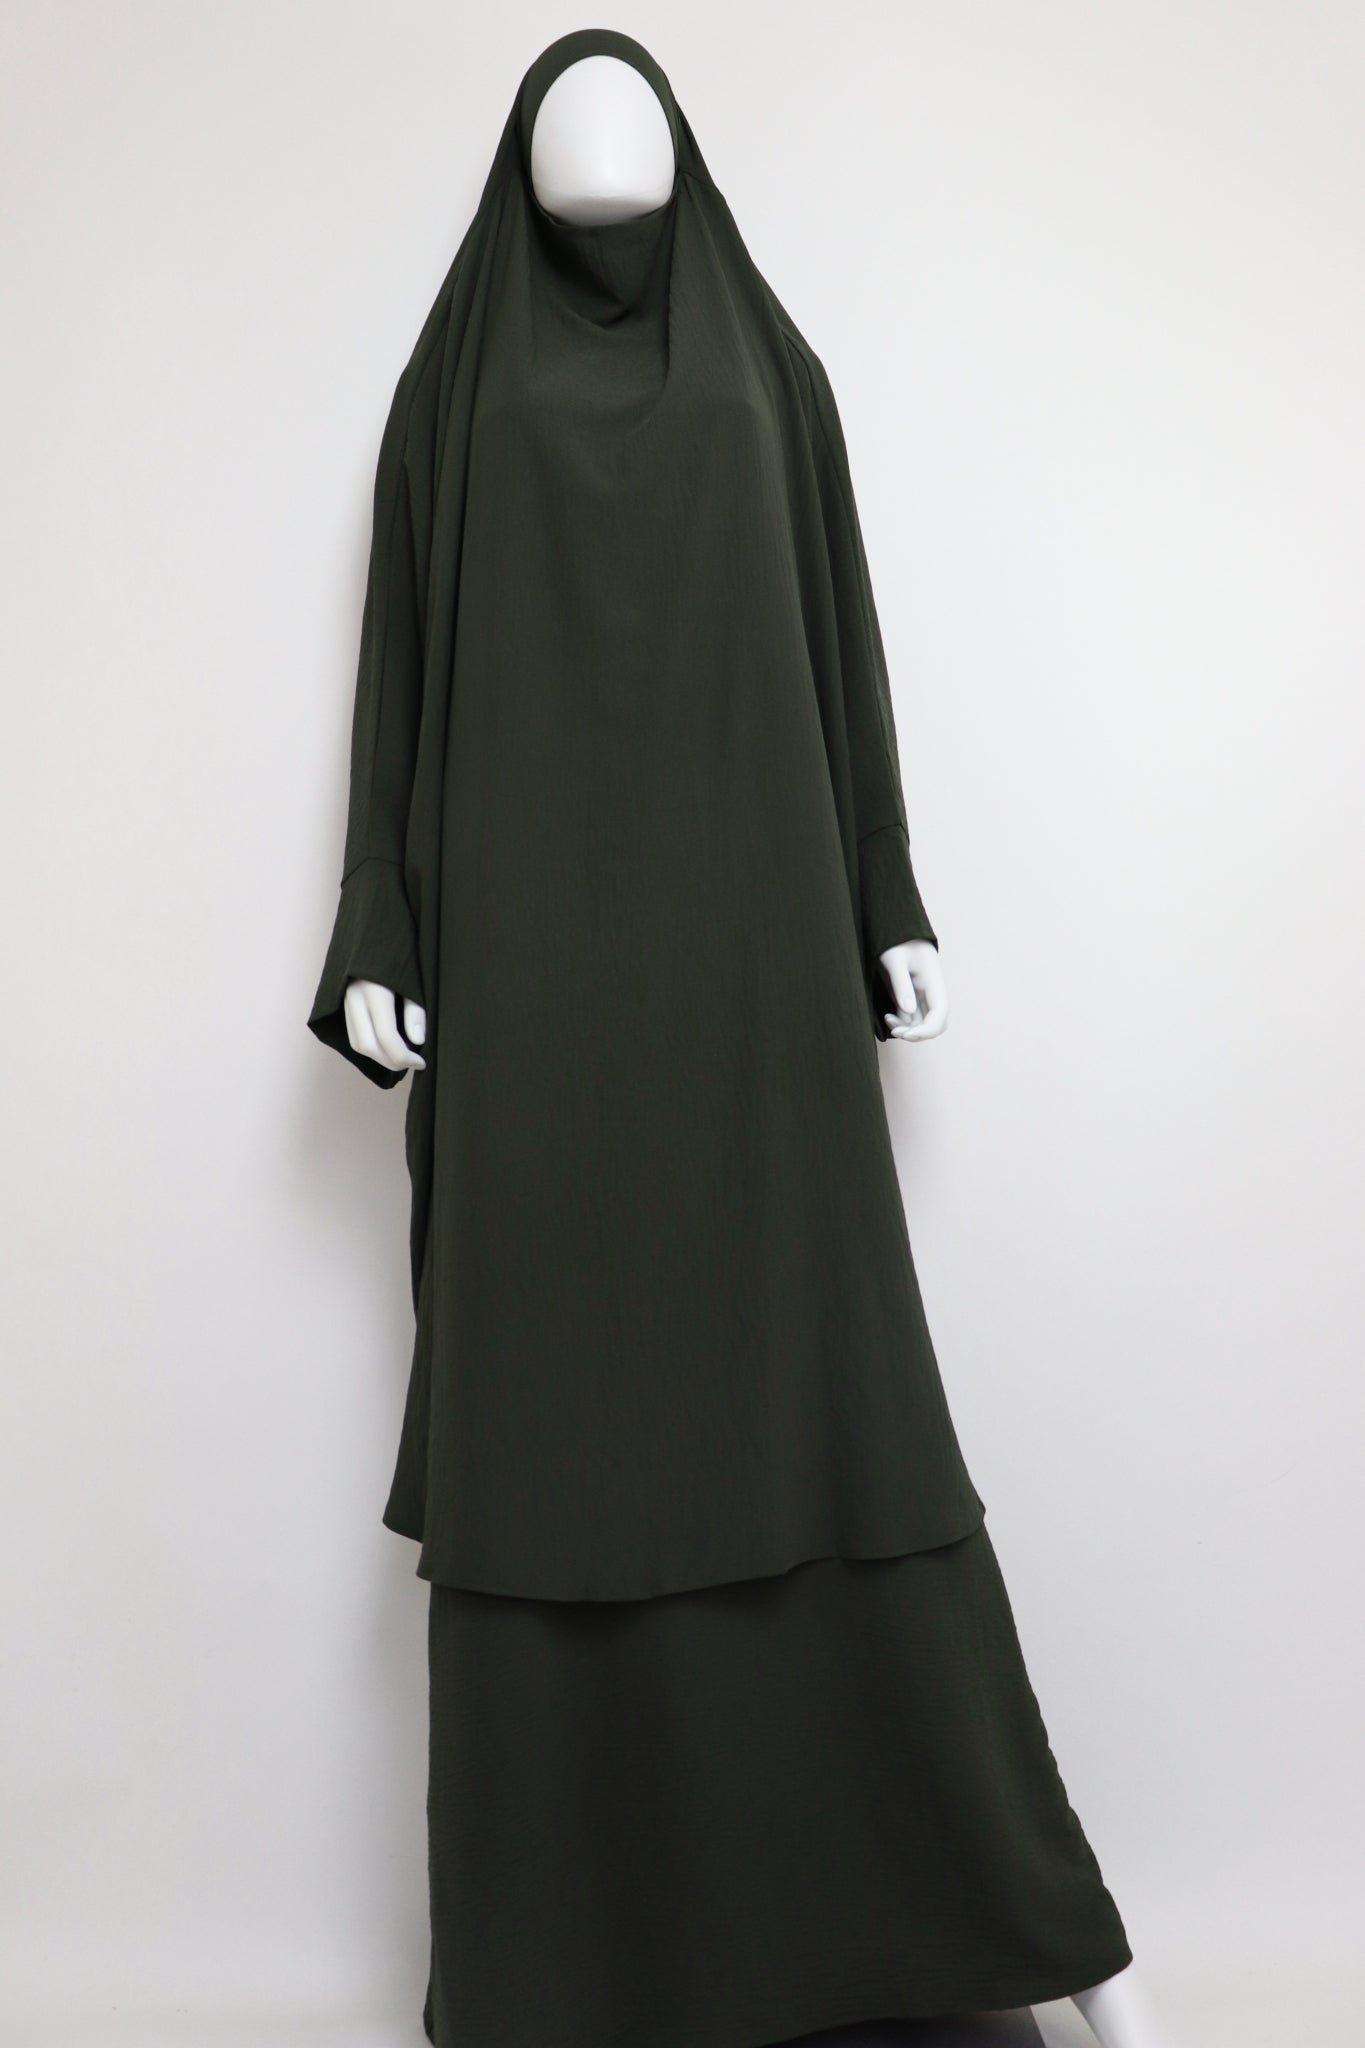 2 Piece Jilbab Dress Set - Pine